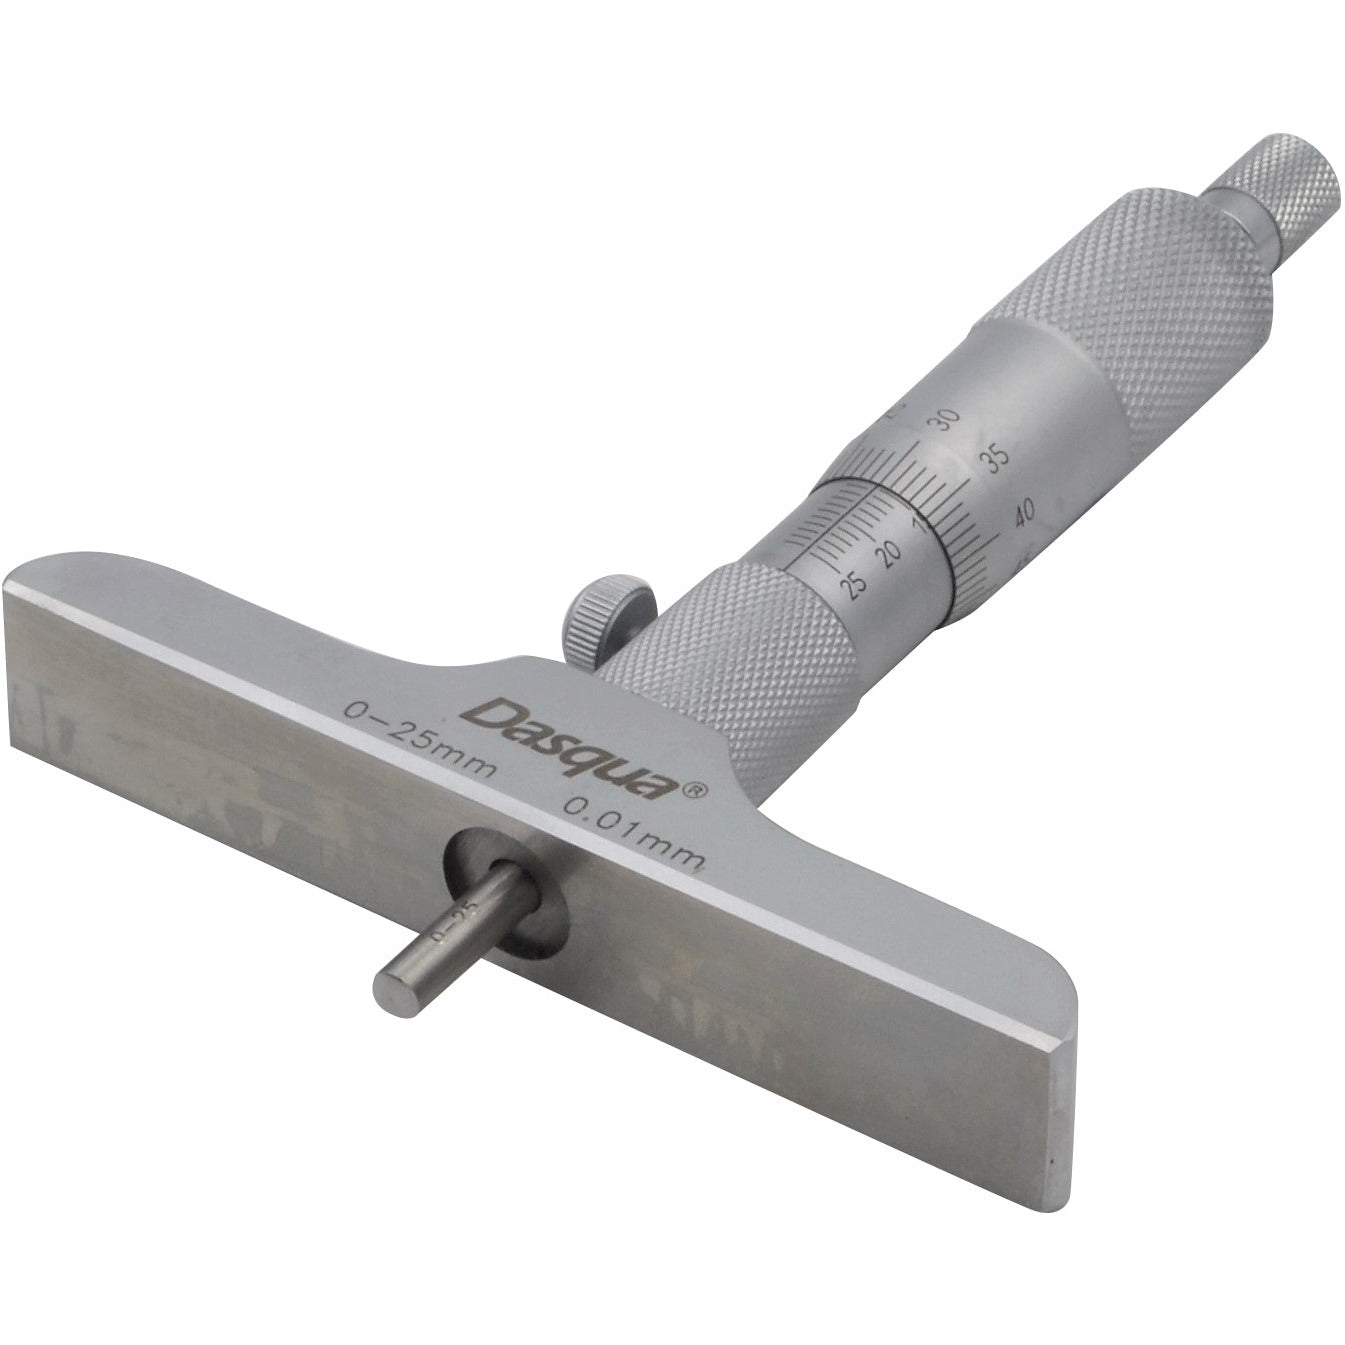 Dasqua Depth Micrometer 0 - 25 mm Series 4611-8106